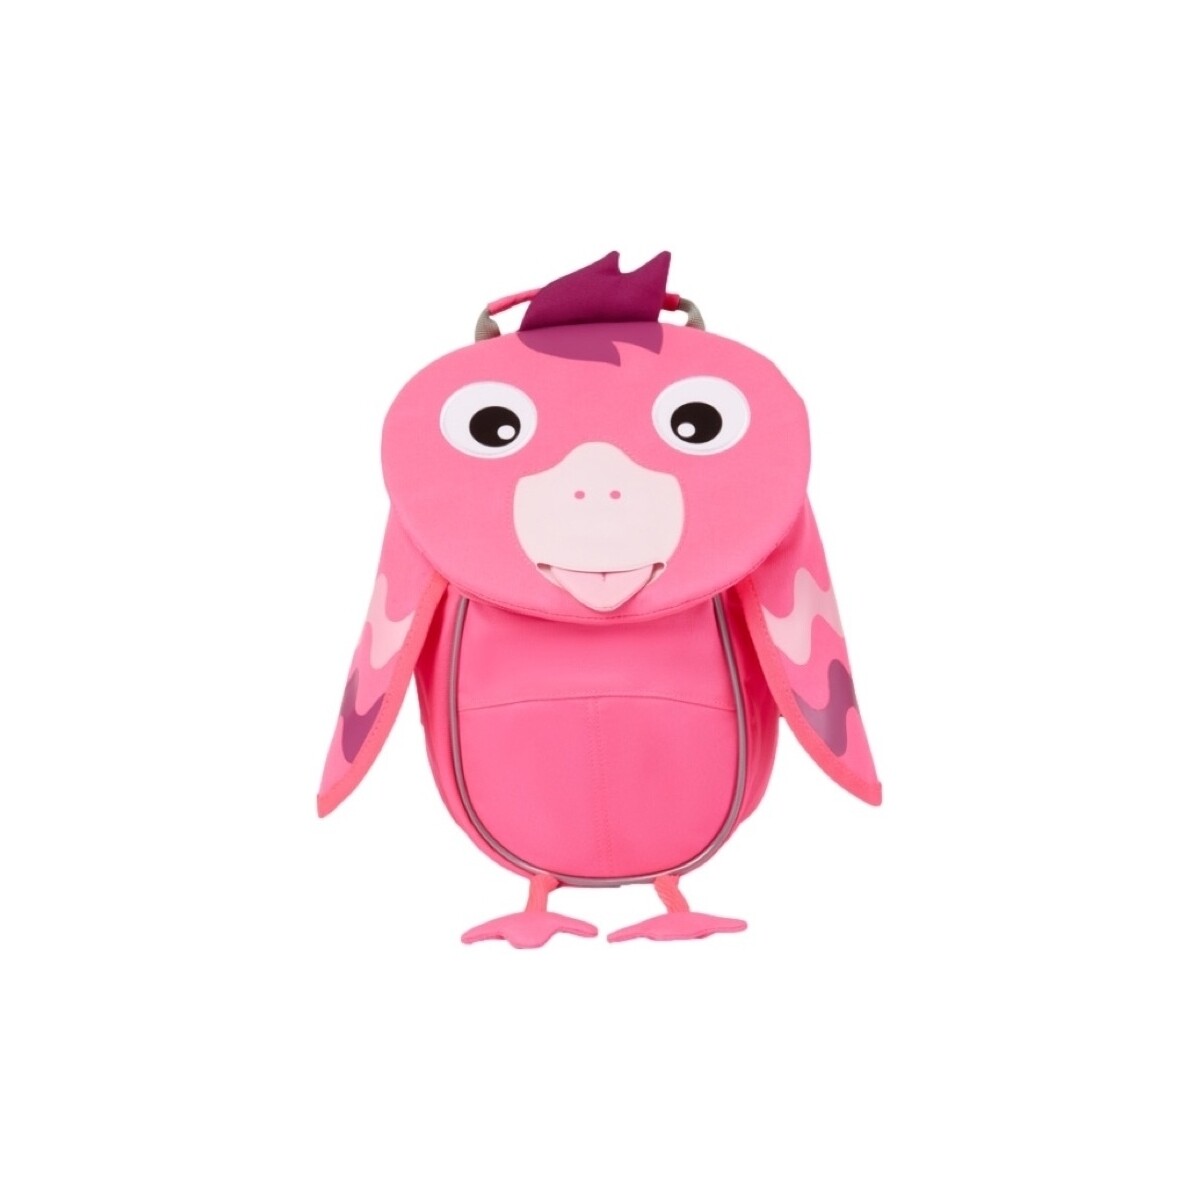 Taschen Kinder Rucksäcke Affenzahn Flamingo Neon Small Friend Backpack Rosa